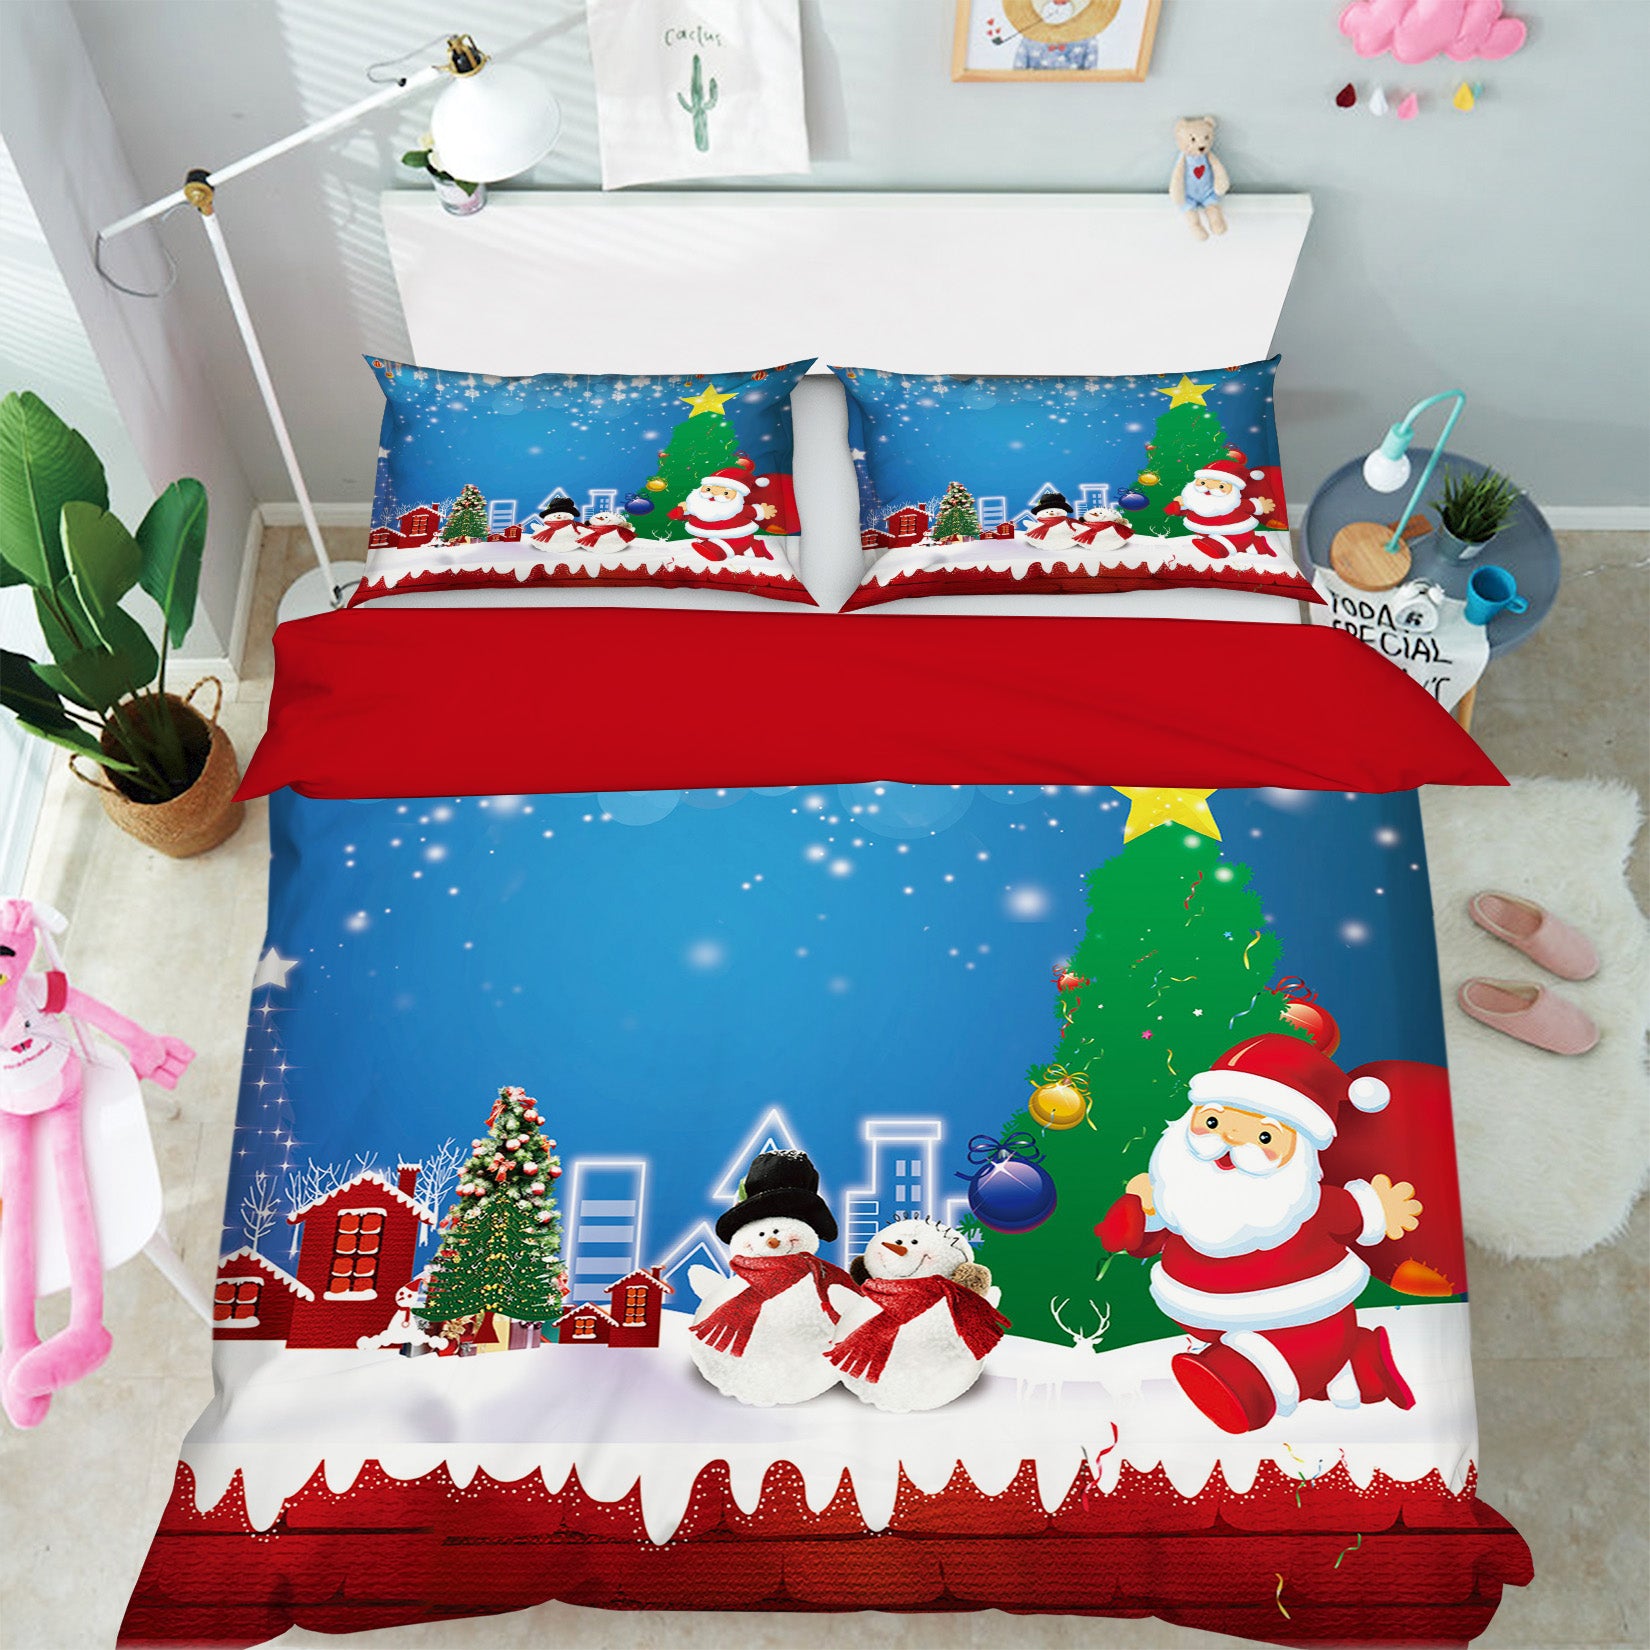 3D Snowman Santa Claus 31099 Christmas Quilt Duvet Cover Xmas Bed Pillowcases